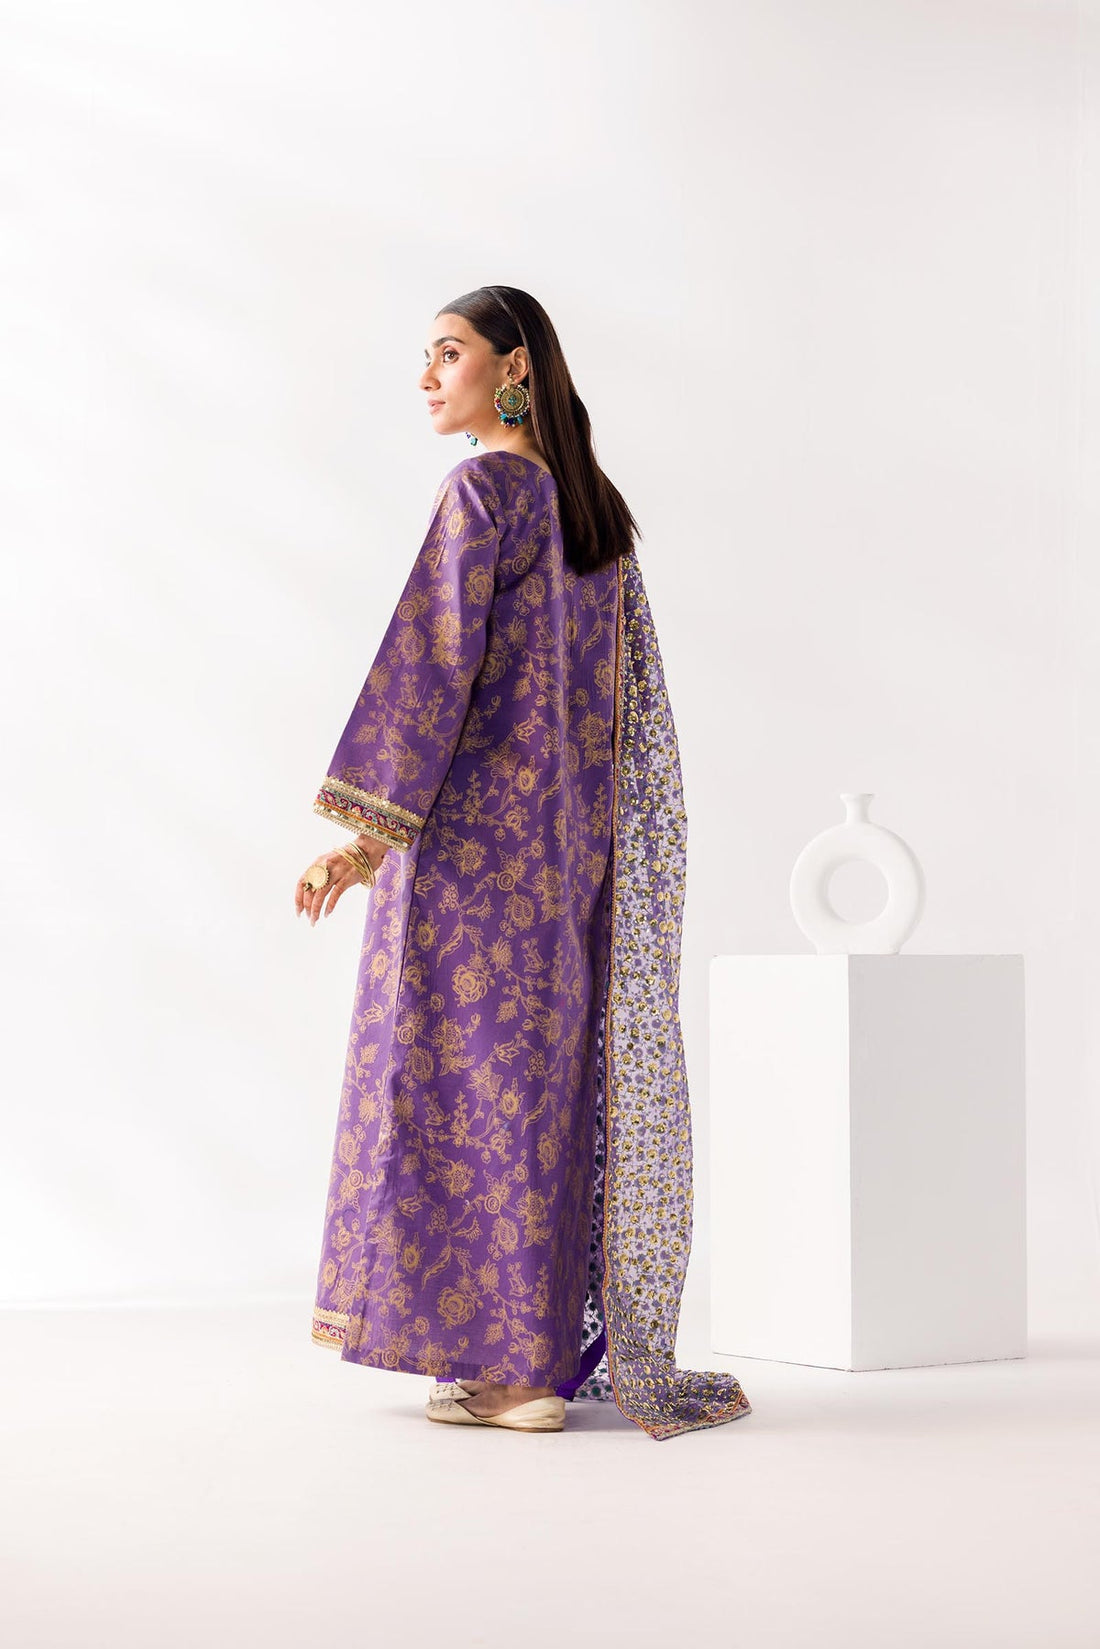 Taanabaana | Mem Saab Collection | M3238 - Khanumjan  Pakistani Clothes and Designer Dresses in UK, USA 